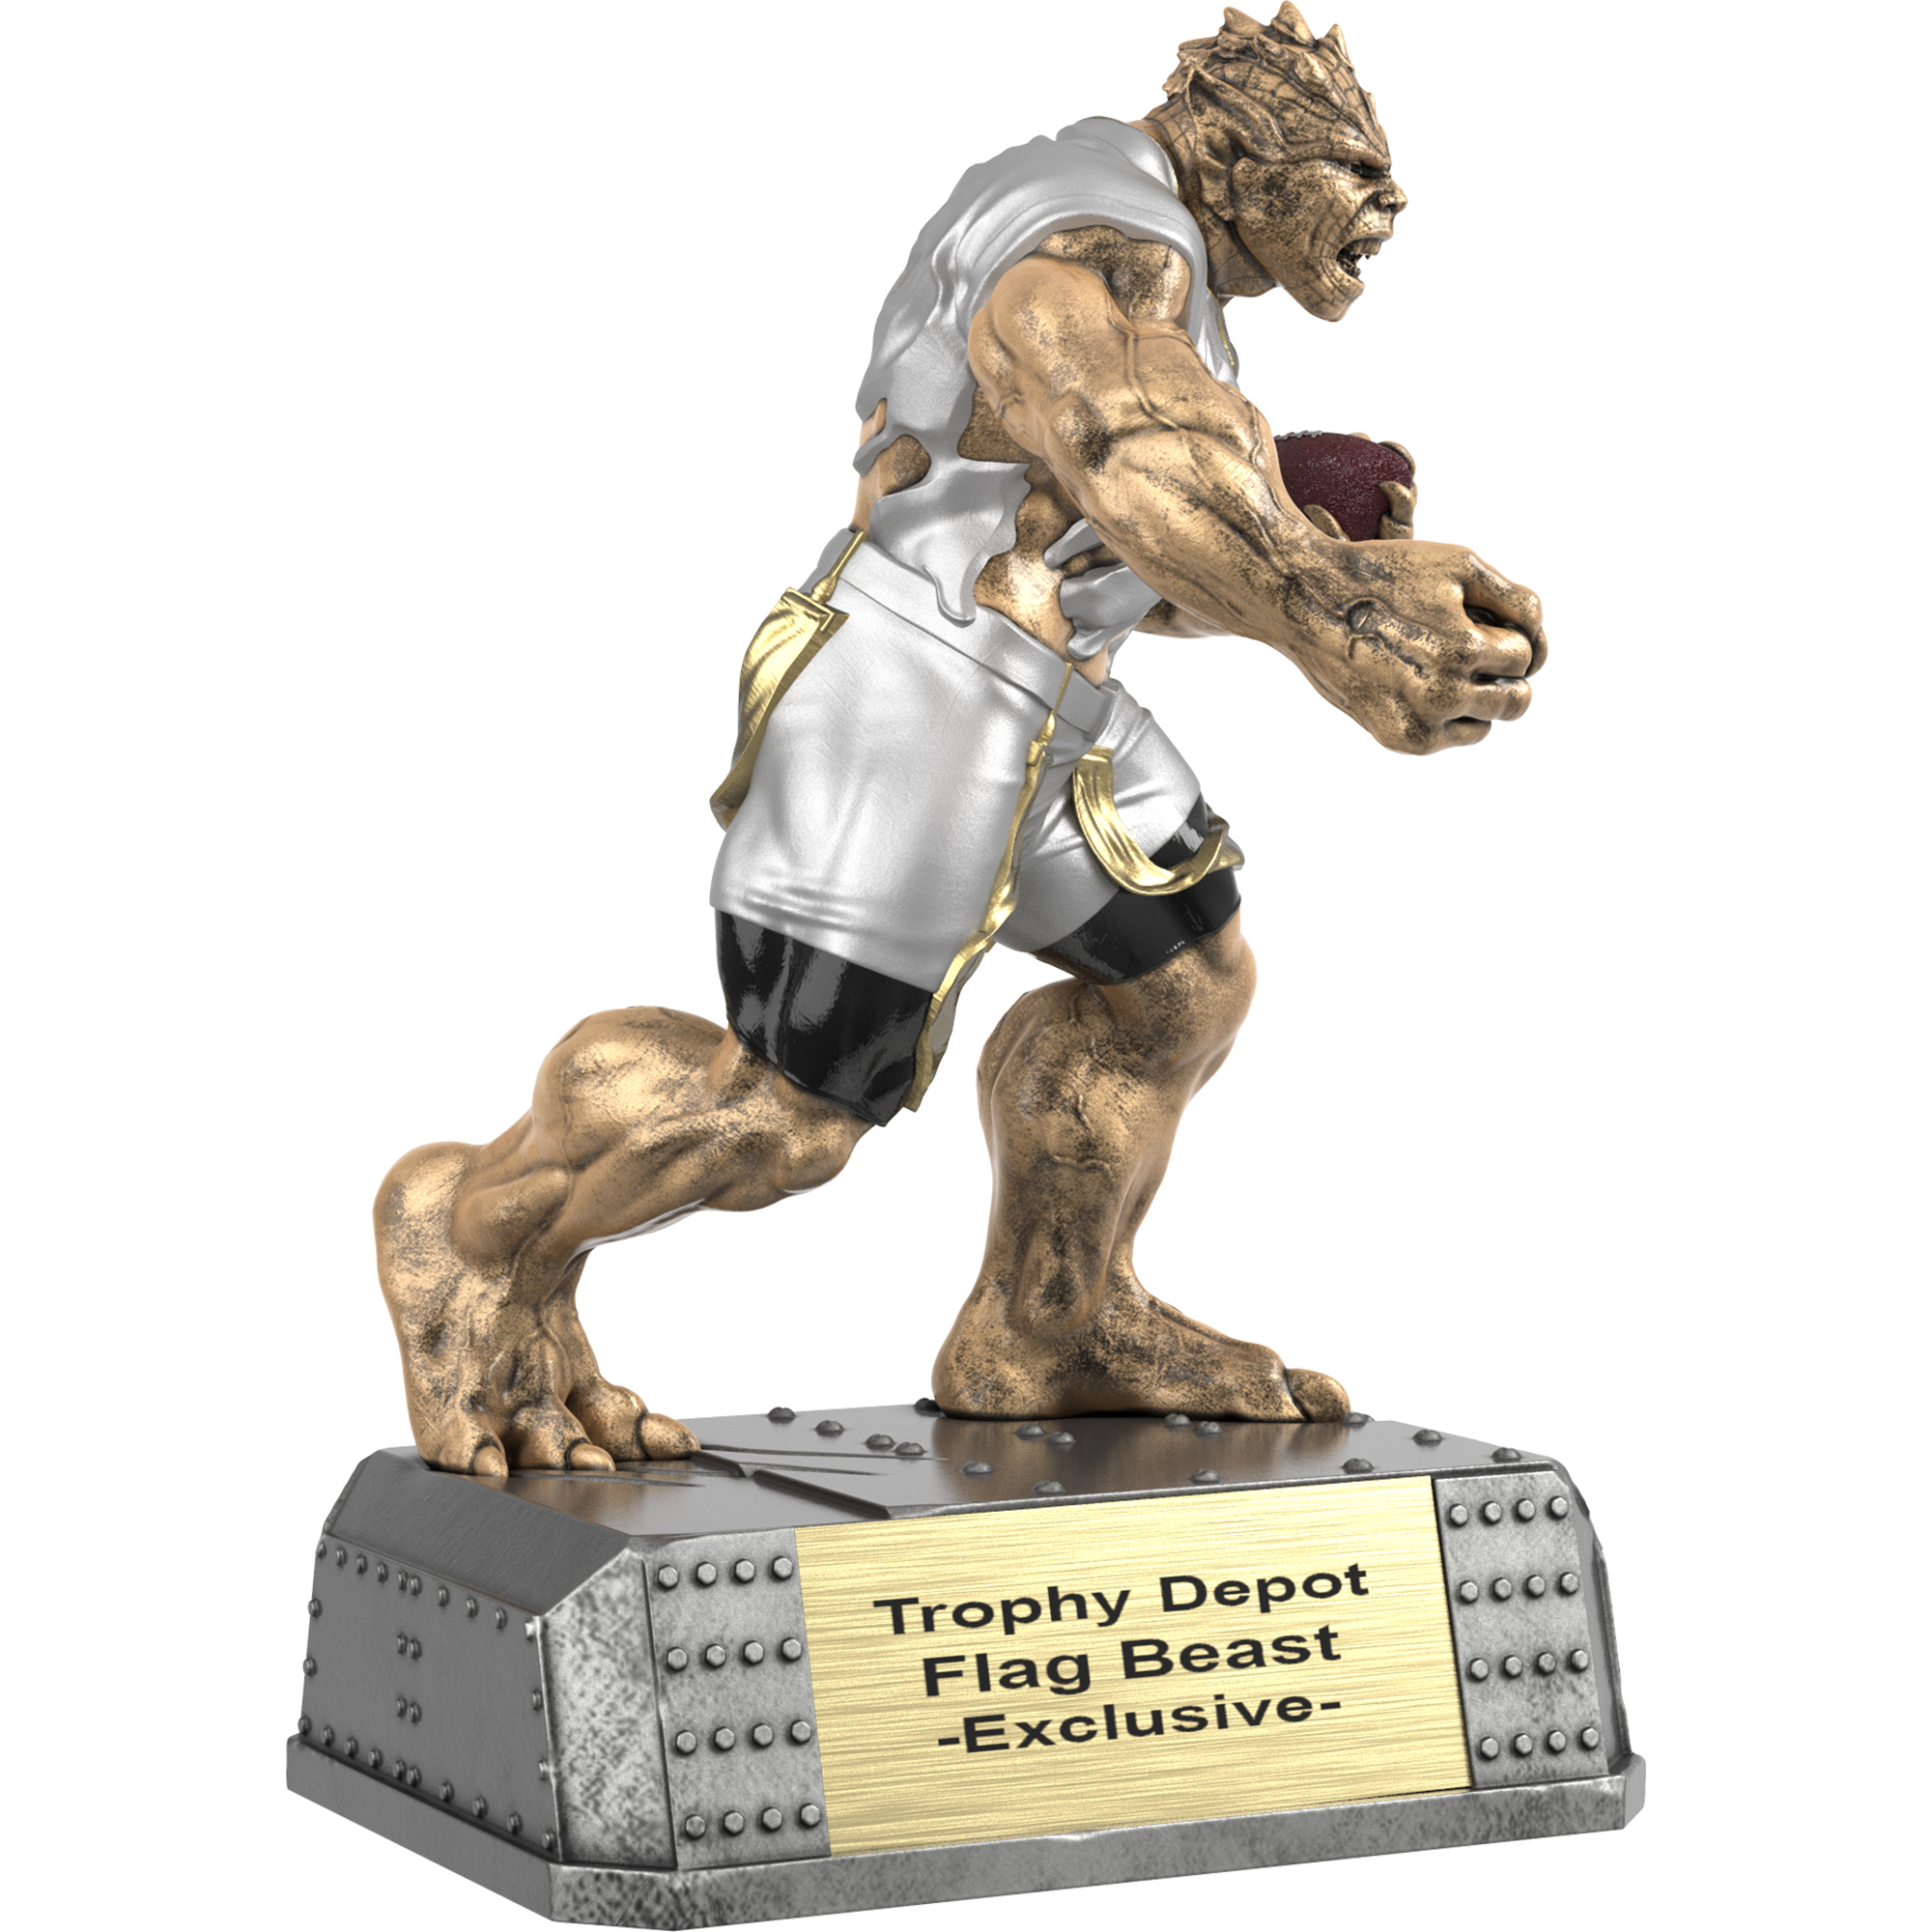 Flag Football Beast Sculpture Trophy - 9.25 inch